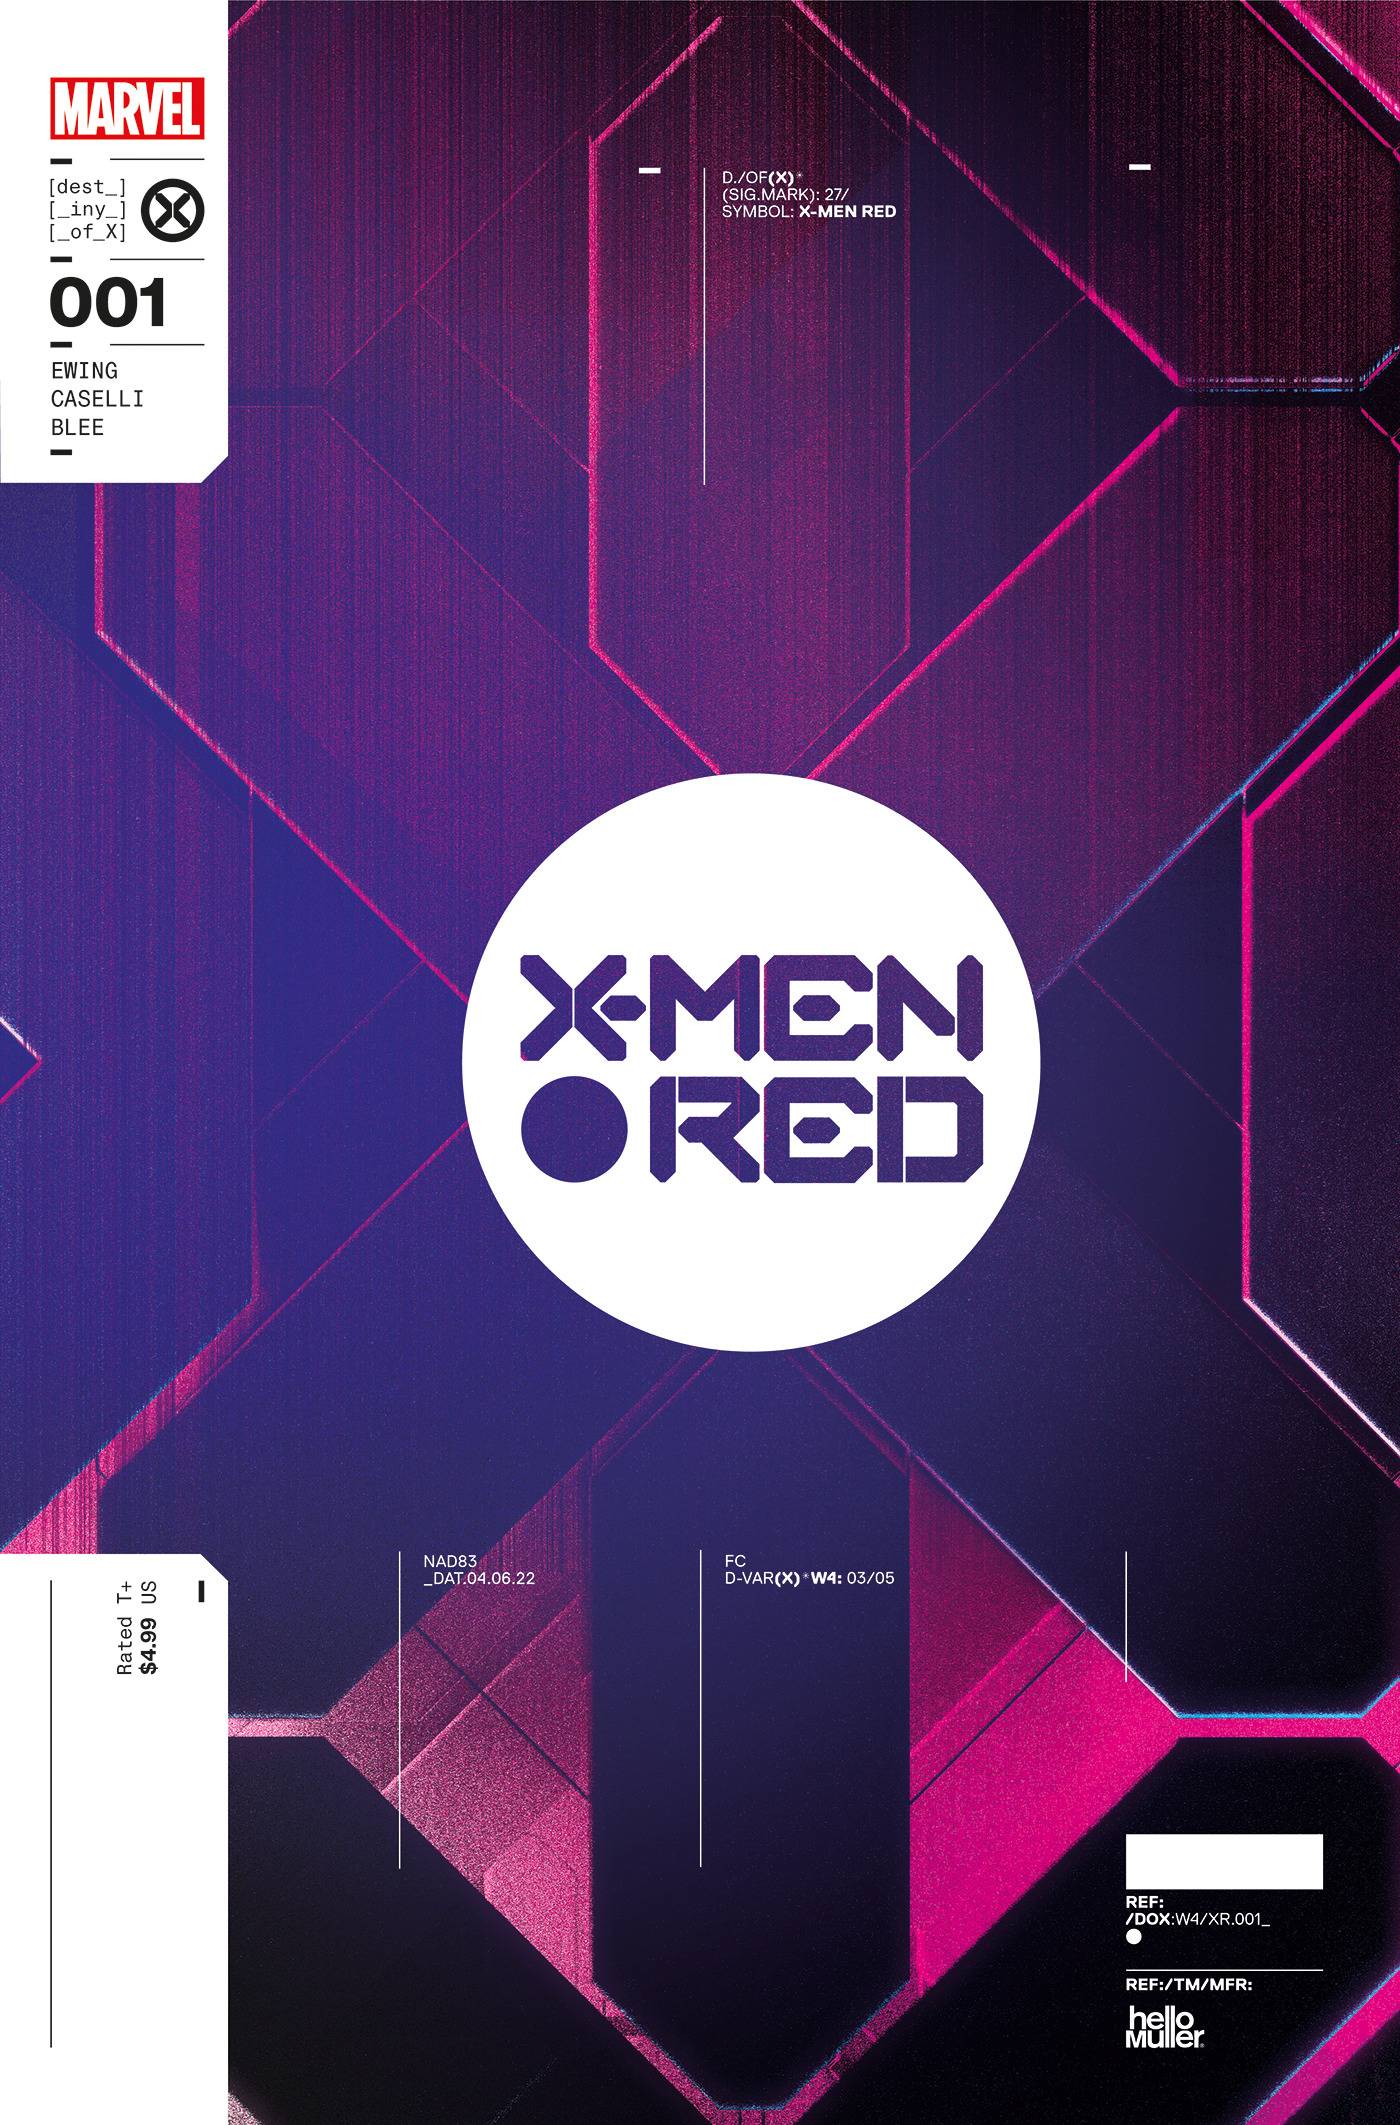 04/06/2022 X-MEN RED 1 MULLER DESIGN VARIANT [1:10]